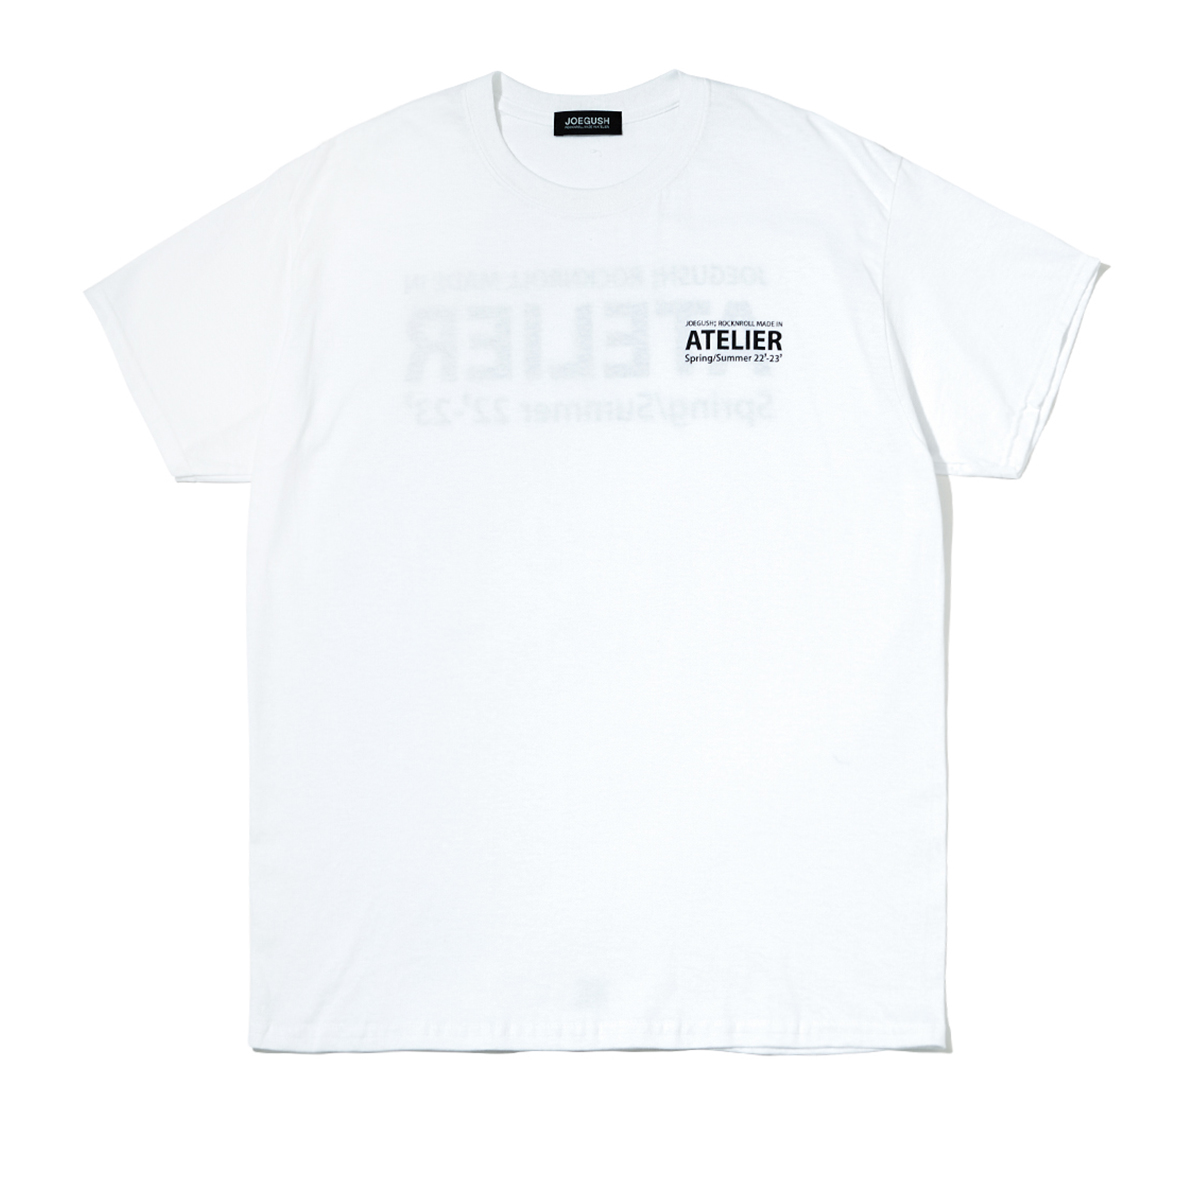 Atelier T-shirt (White)